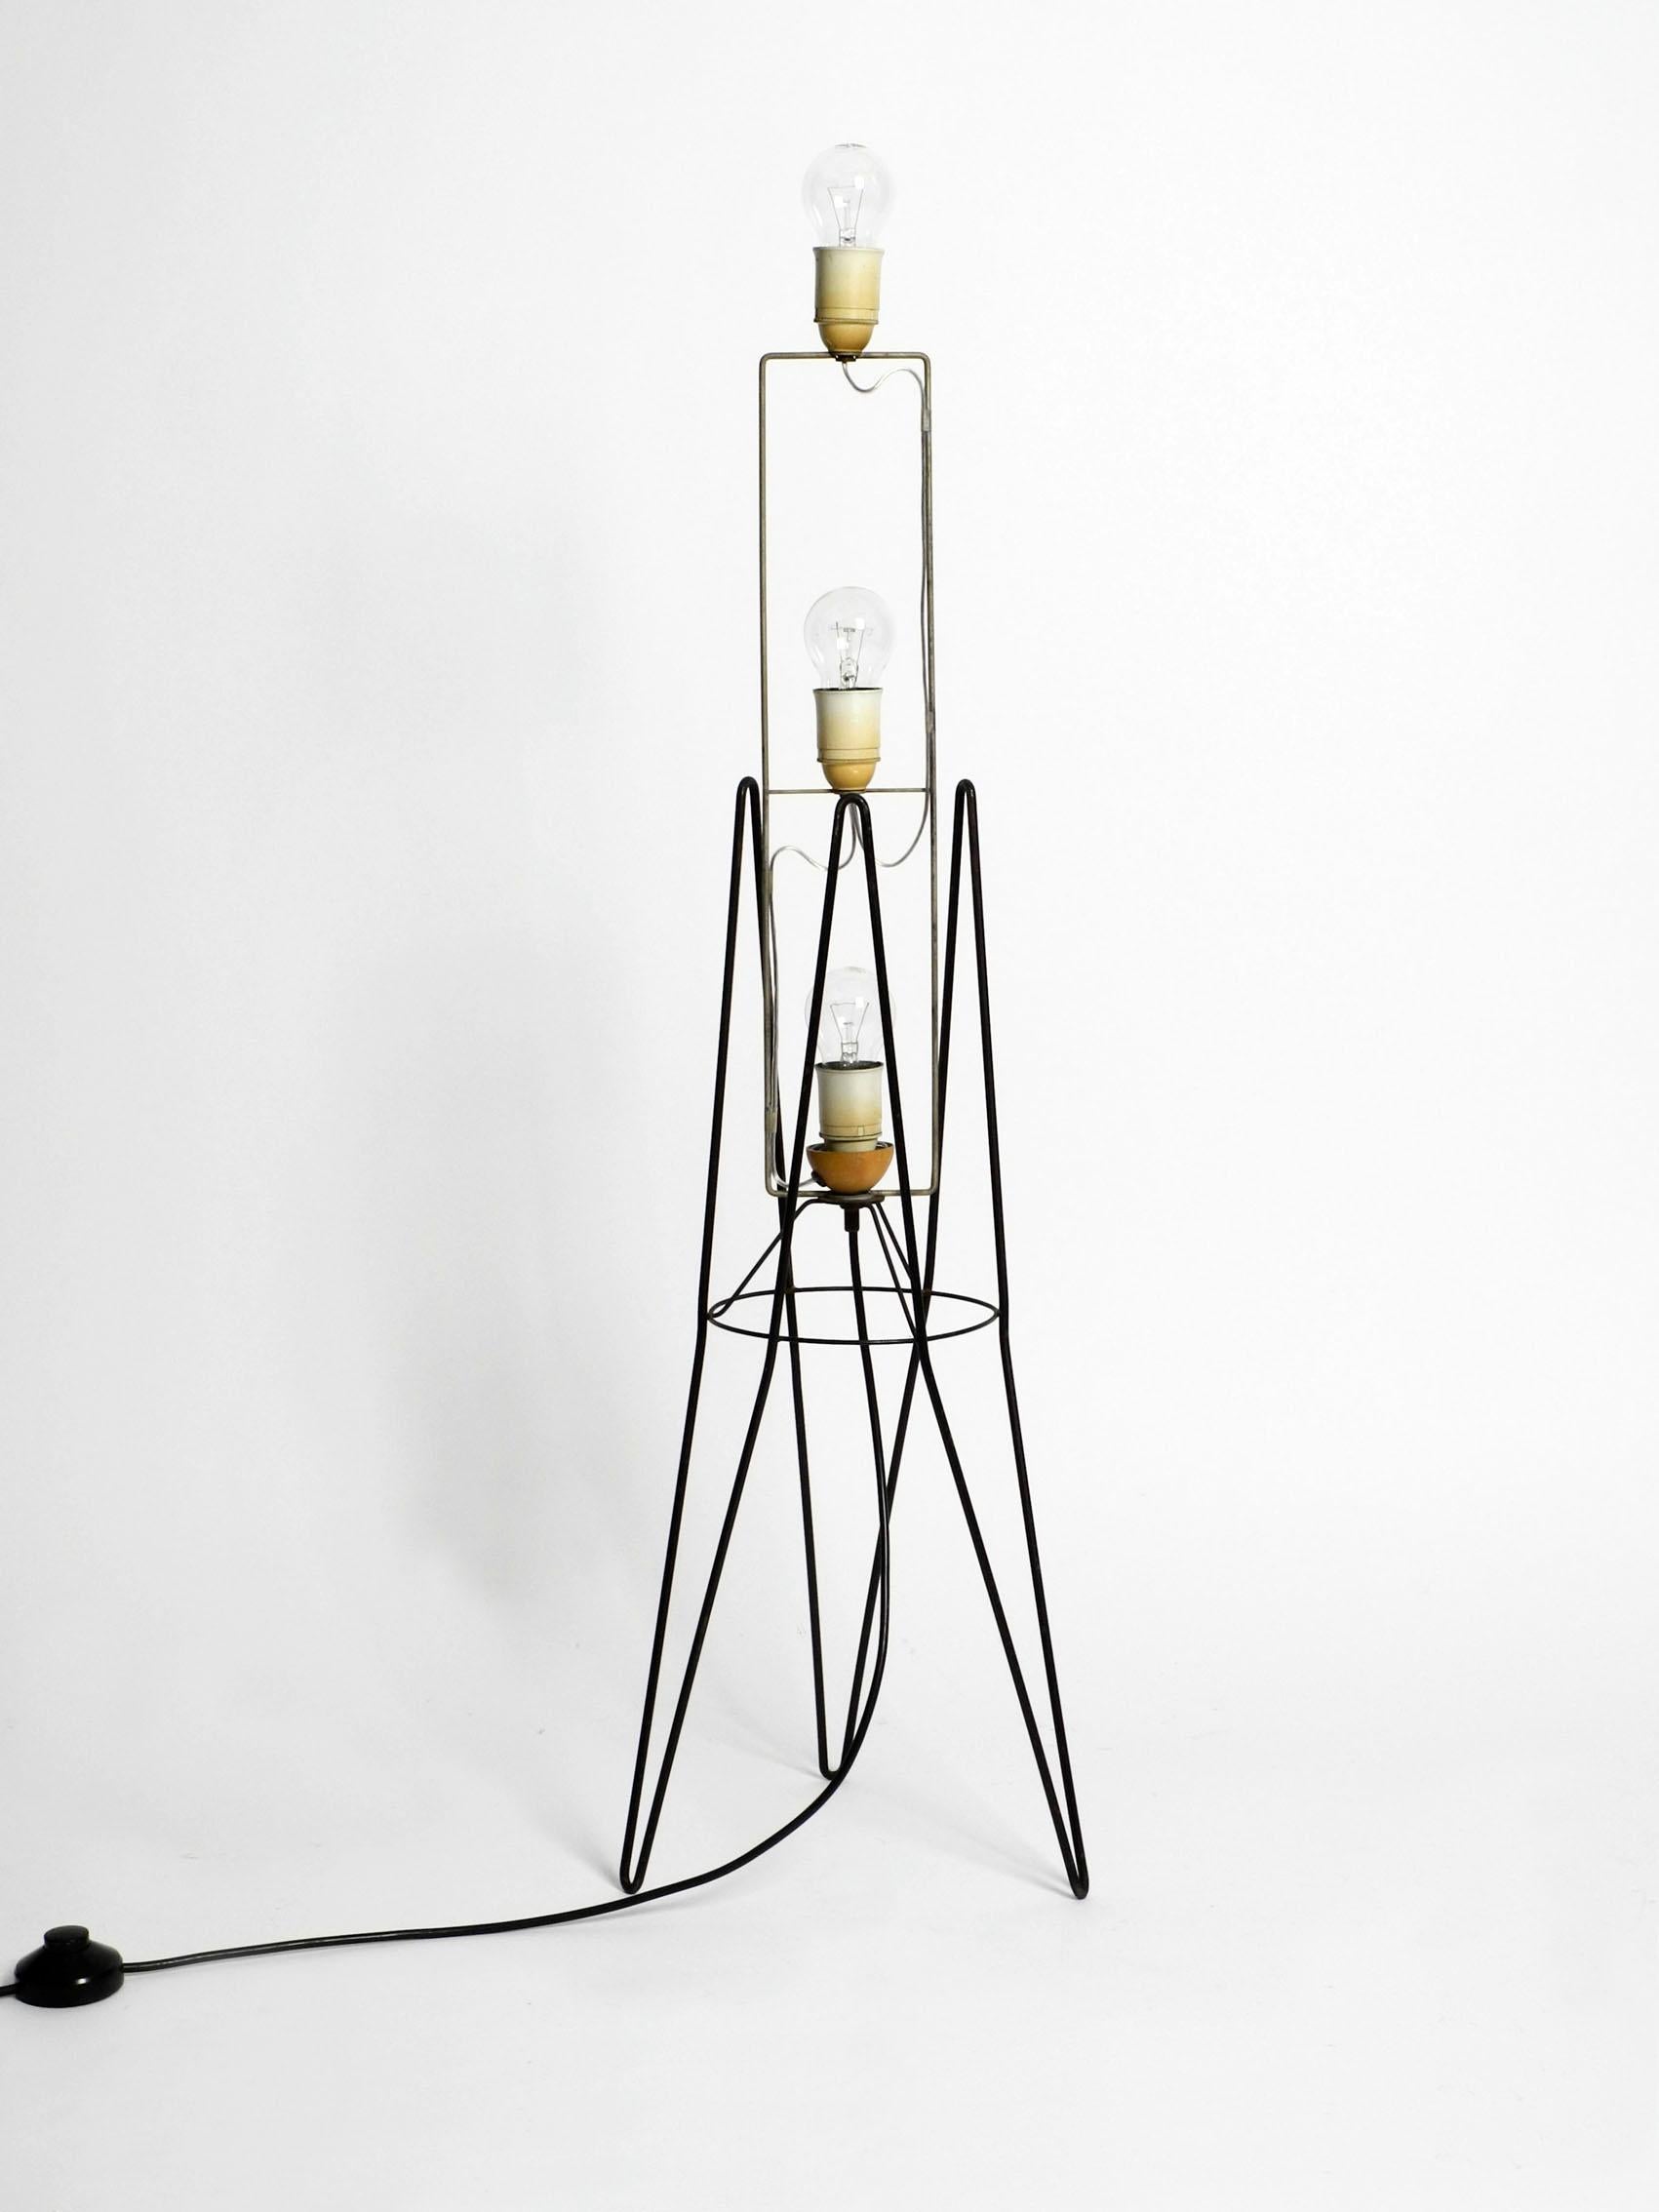 Very Rare Midcentury Italian Modern Floor Lamp with Fiberglass Shade and Metal 1